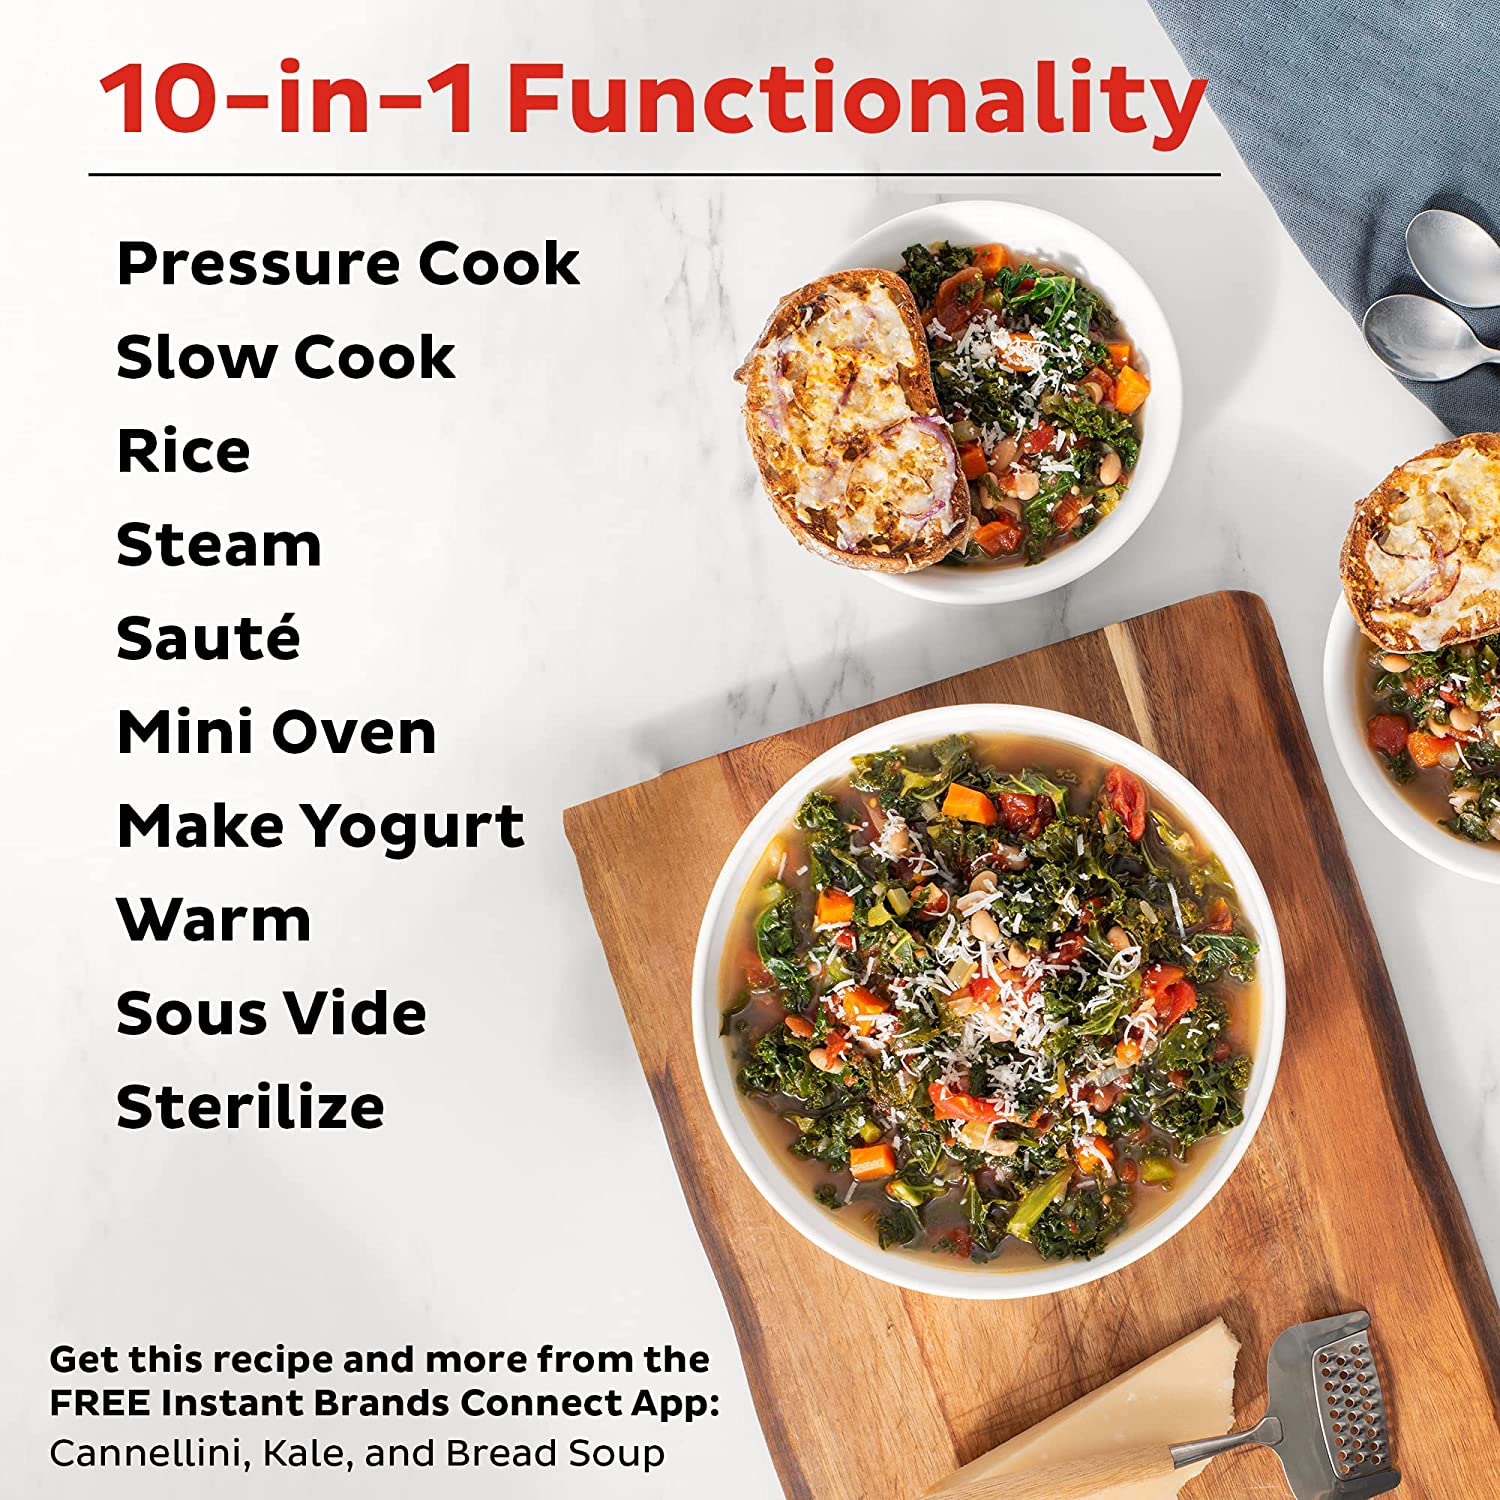  Instant Pot Pro 10-in-1 Pressure Cooker, Slow Cooker,  Rice/Grain Cooker, Steamer, Sauté, Sous Vide, Yogurt Maker, Sterilizer, and  Warmer, Includes App With Over 800 Recipes, Black, 6 Quart: Home & Kitchen